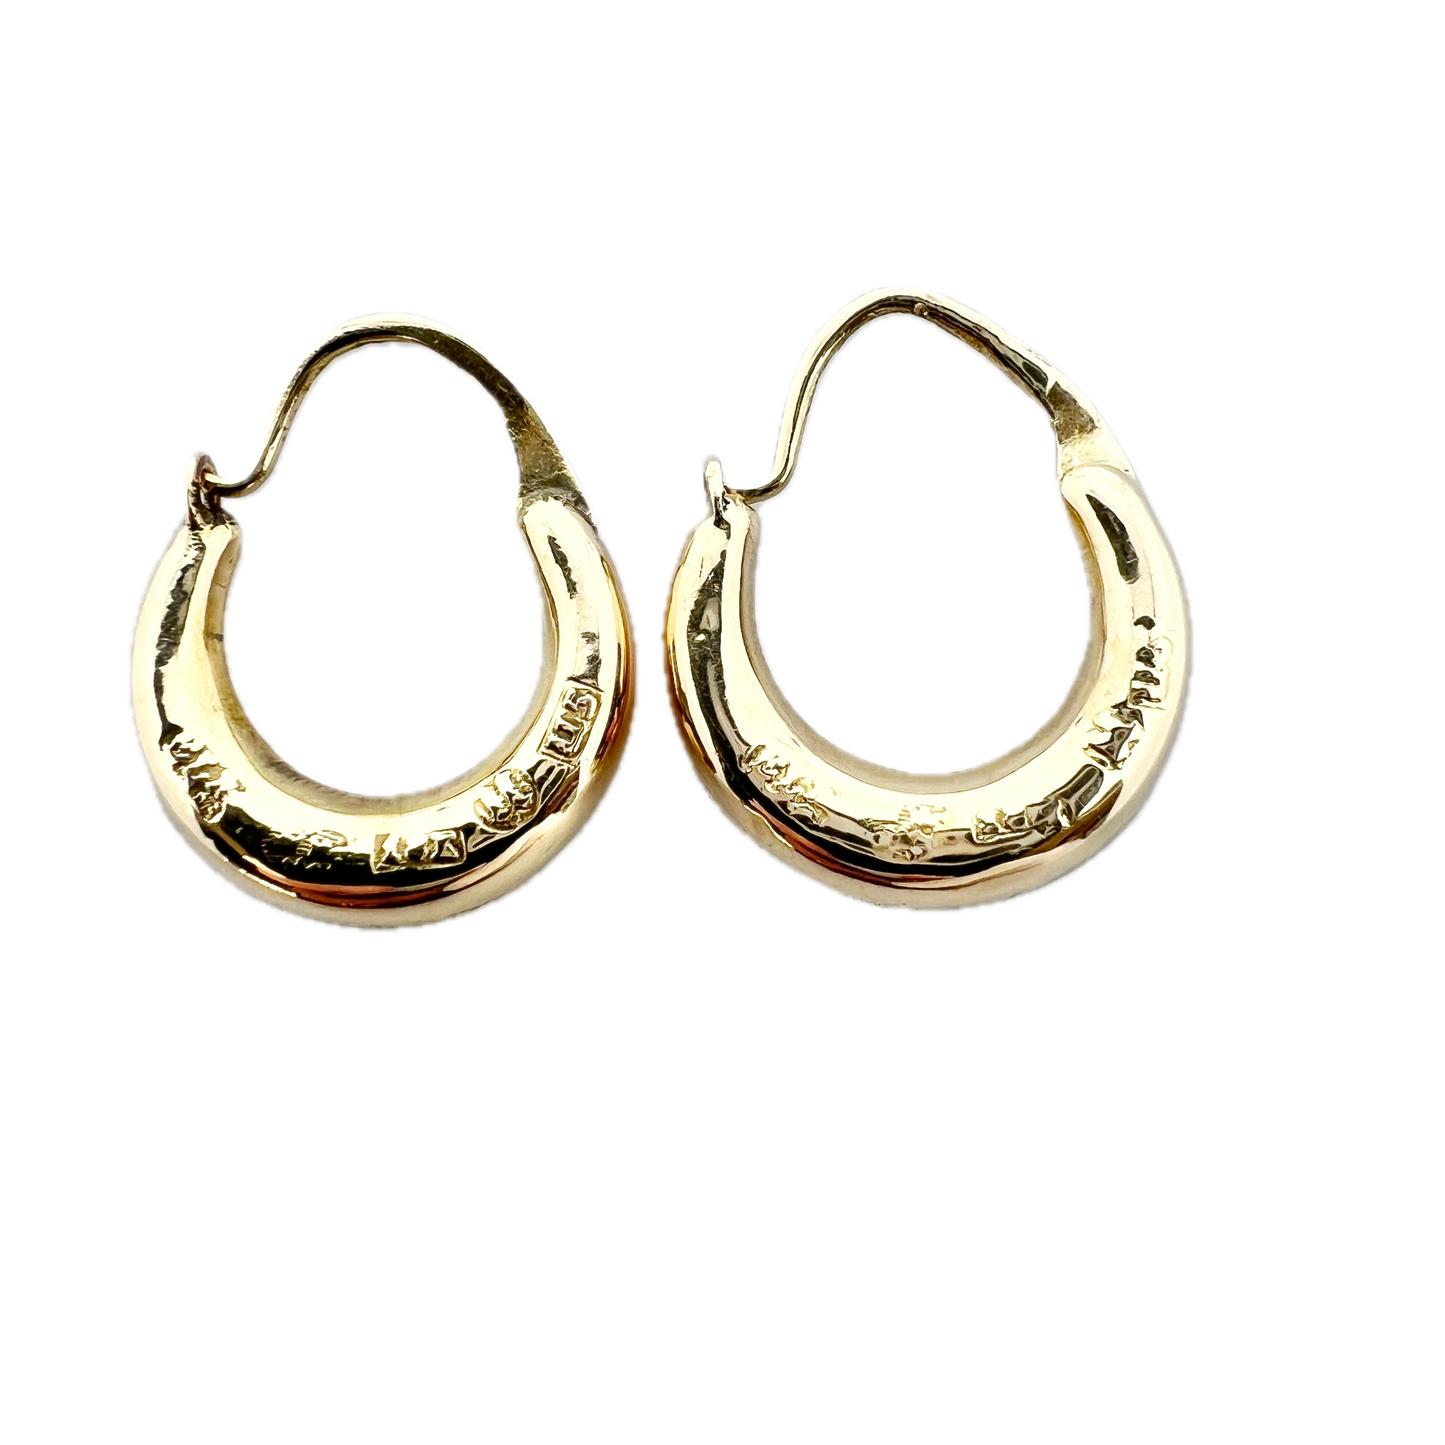 Sweden 1874. Antique 18k Gold Earrings.